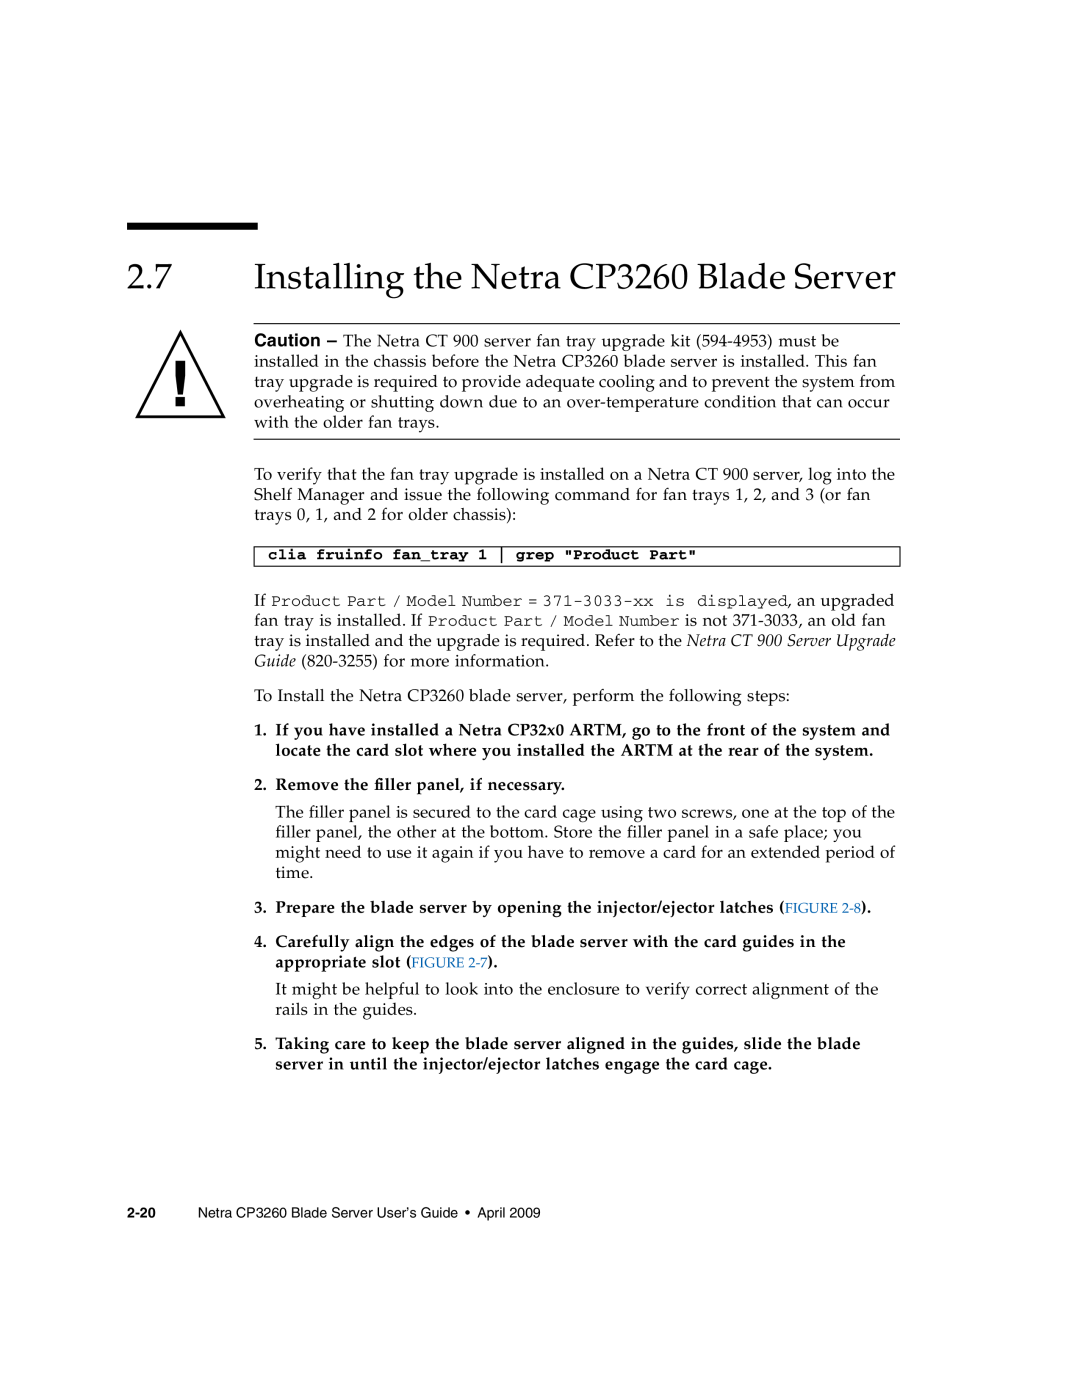 Sun Microsystems manual Installing the Netra CP3260 Blade Server 